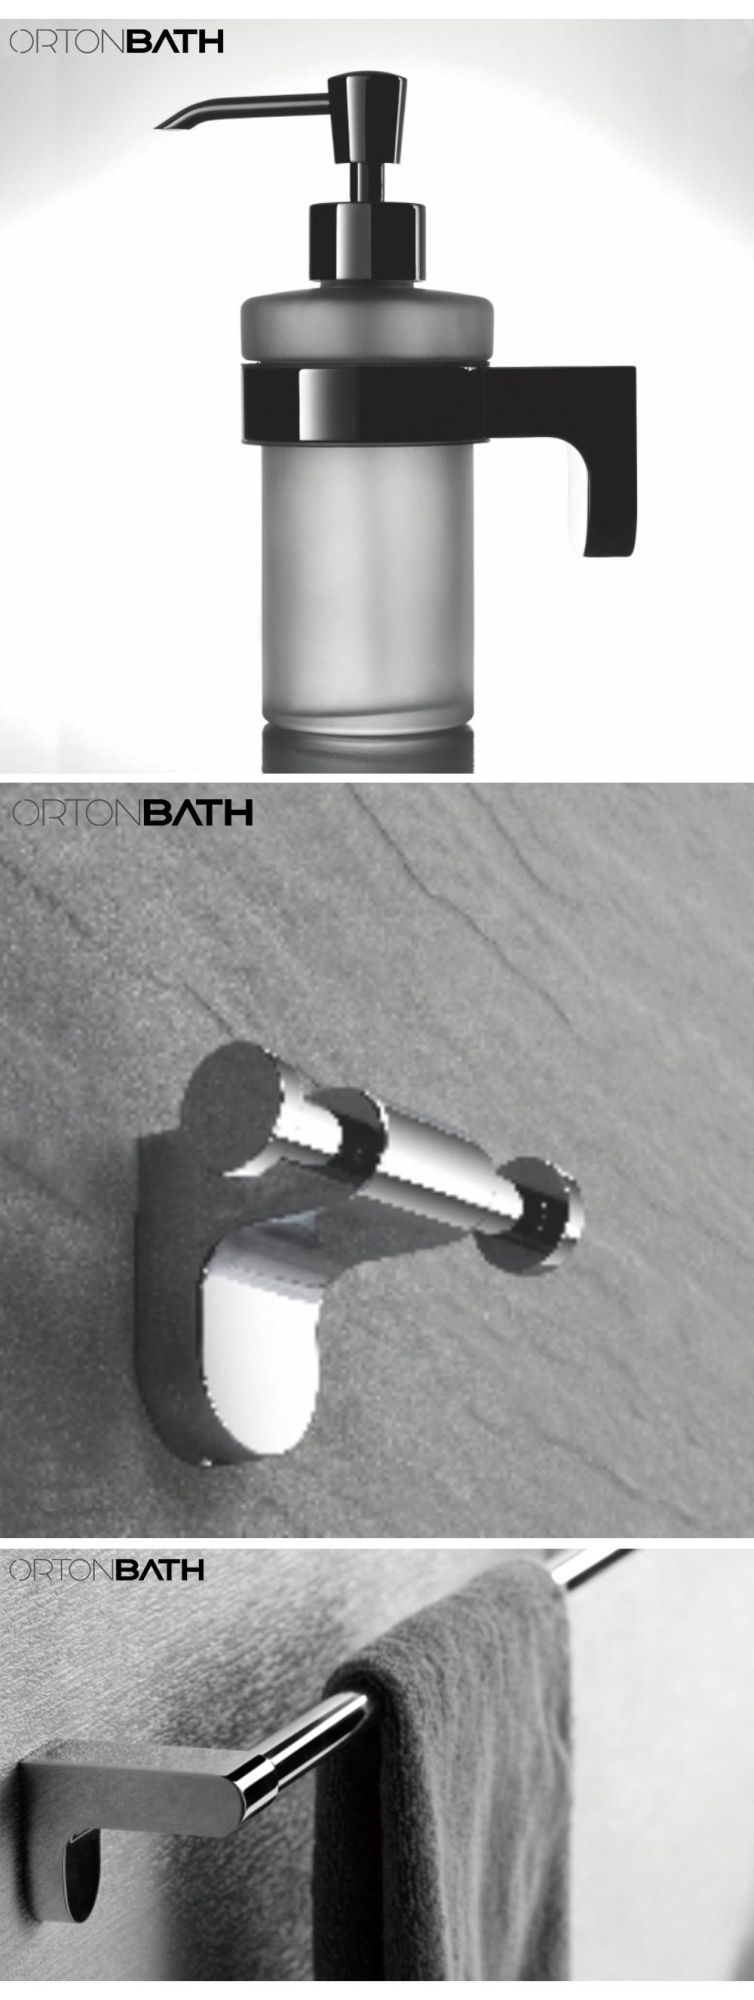 Ortonbath 5-Pieces Matte Black Bathroom Hardware Set SUS304 Stainless Steel Round Wall Mounted - Includes Hand Towel Bar Toilet Paper Holder Soap Dispenser